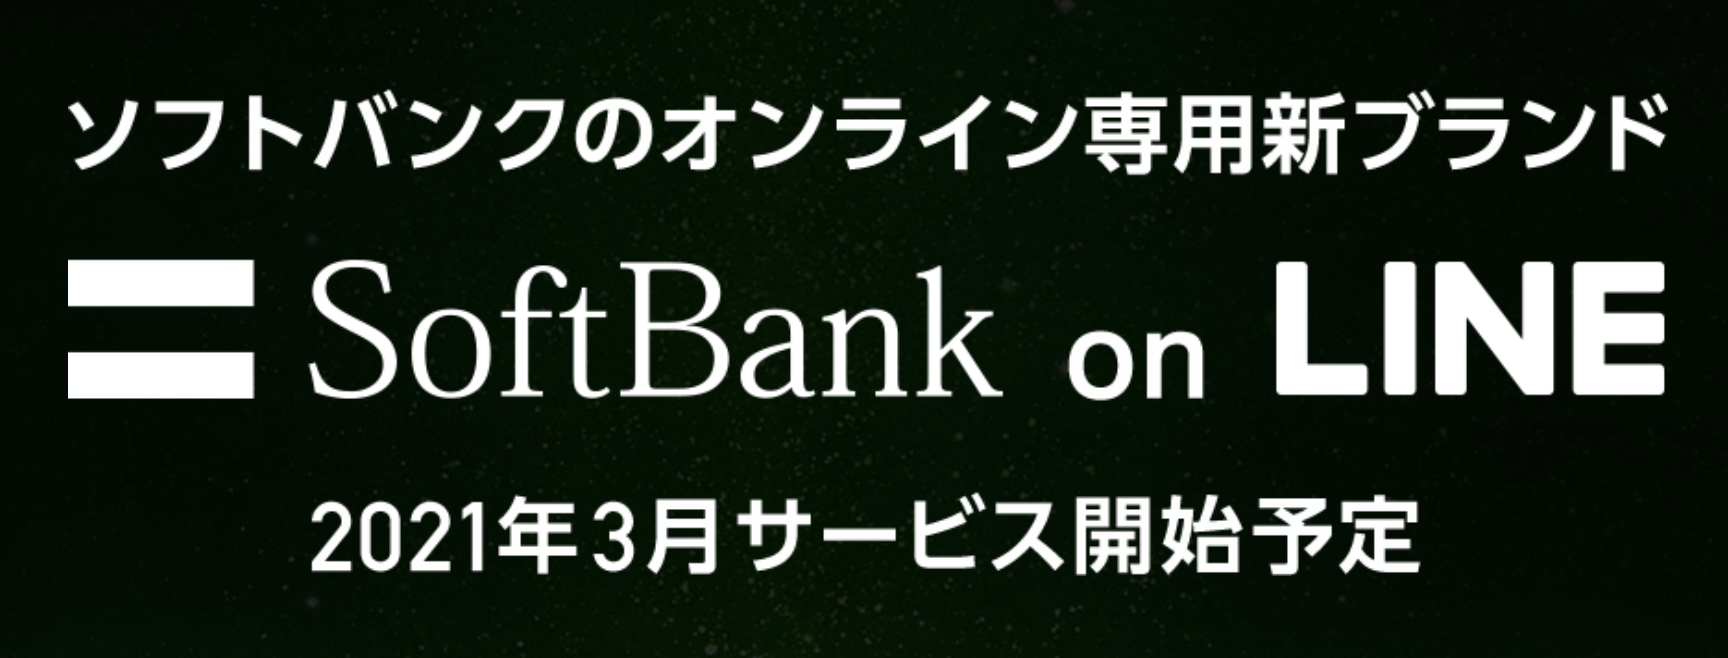 【PayPayボーナス3,000円相当貰える】SoftBank on LINE 事前申込の受付が開始【キャンペーン実施中】